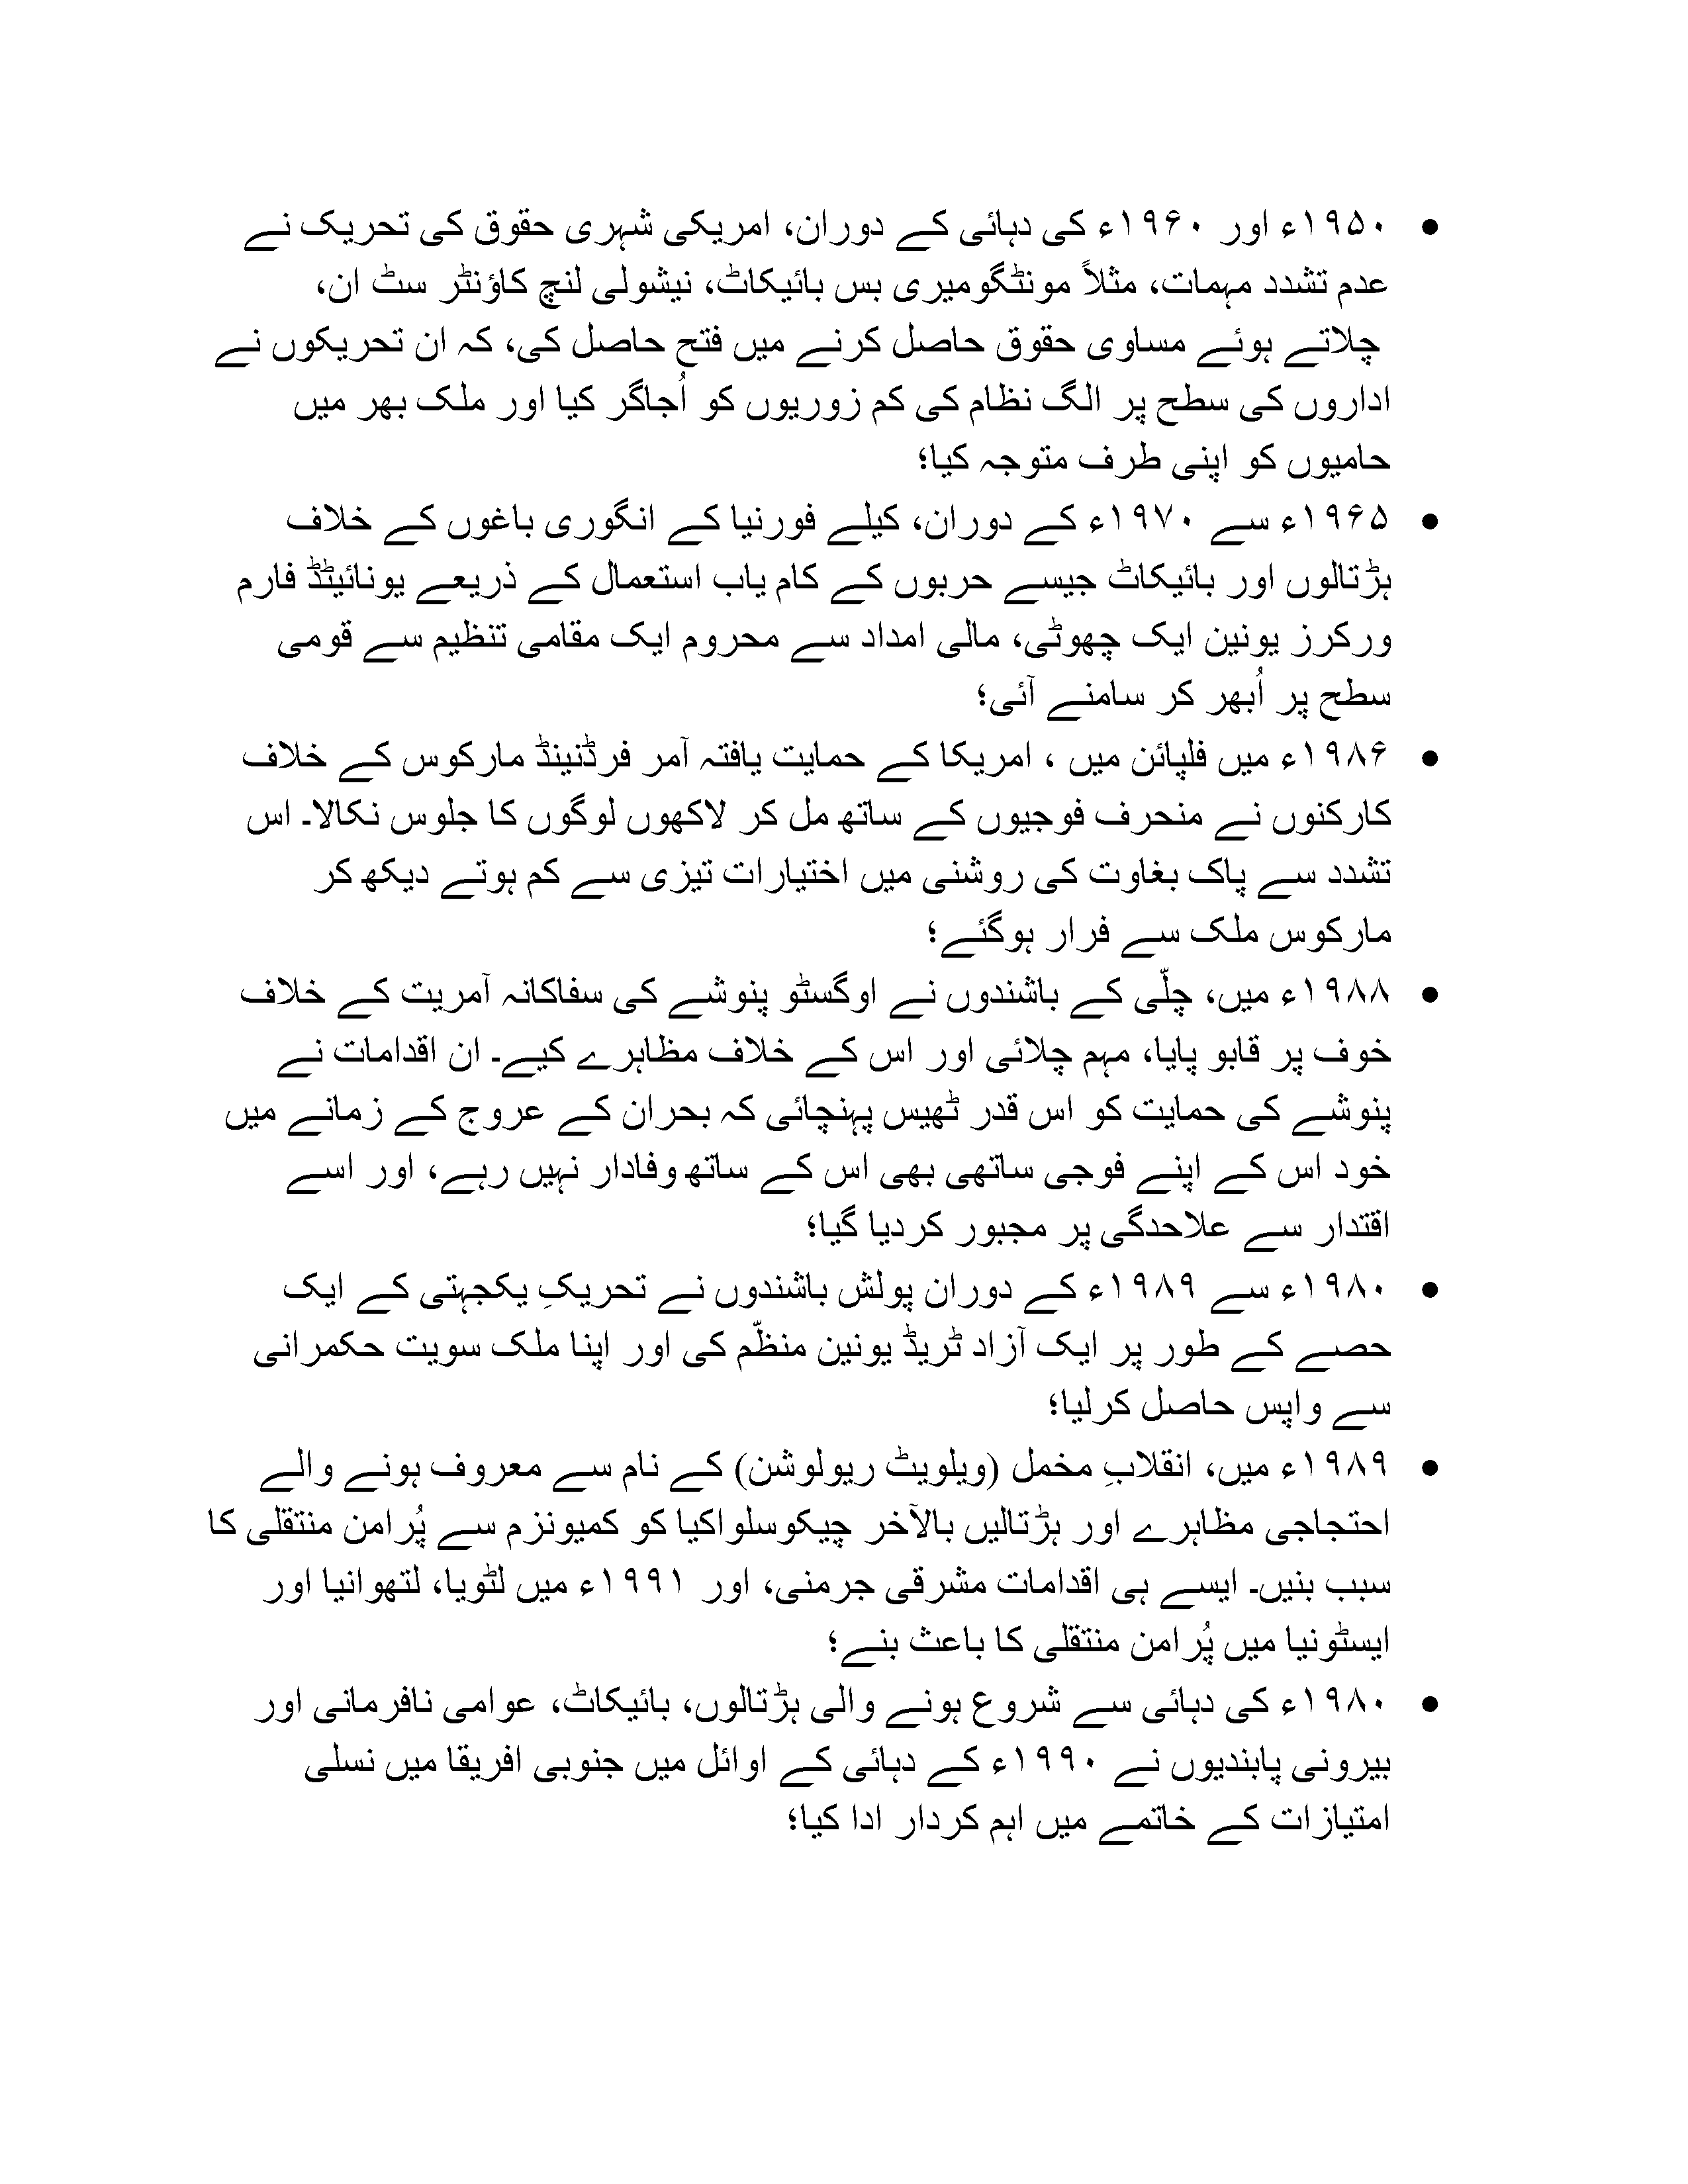 The Trifecta of Civil Resistance: Unity, Planning, Discipline (Urdu)